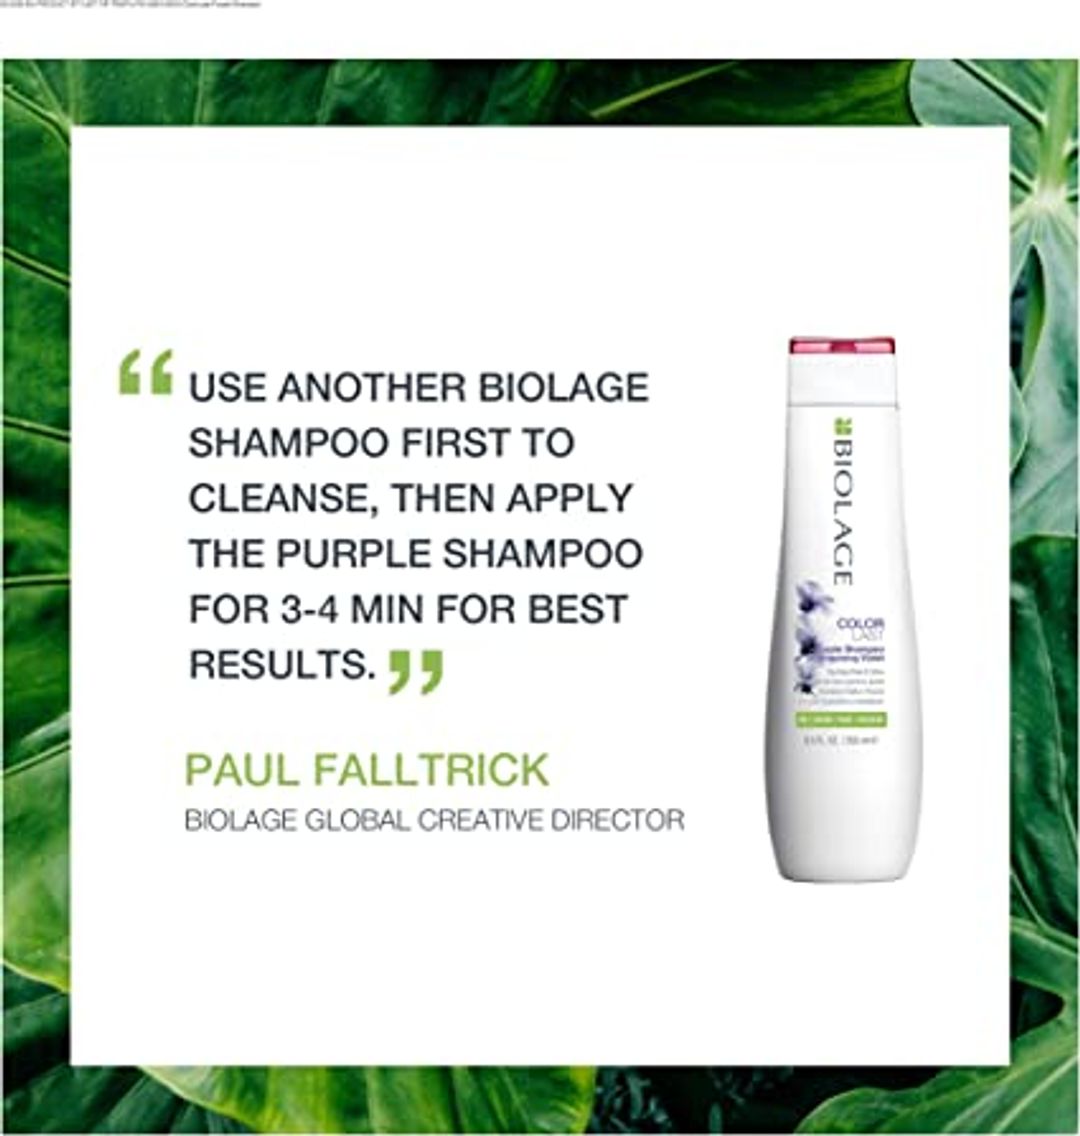 Matrix Biolage Colorlast Purple Shampoo - 250ml